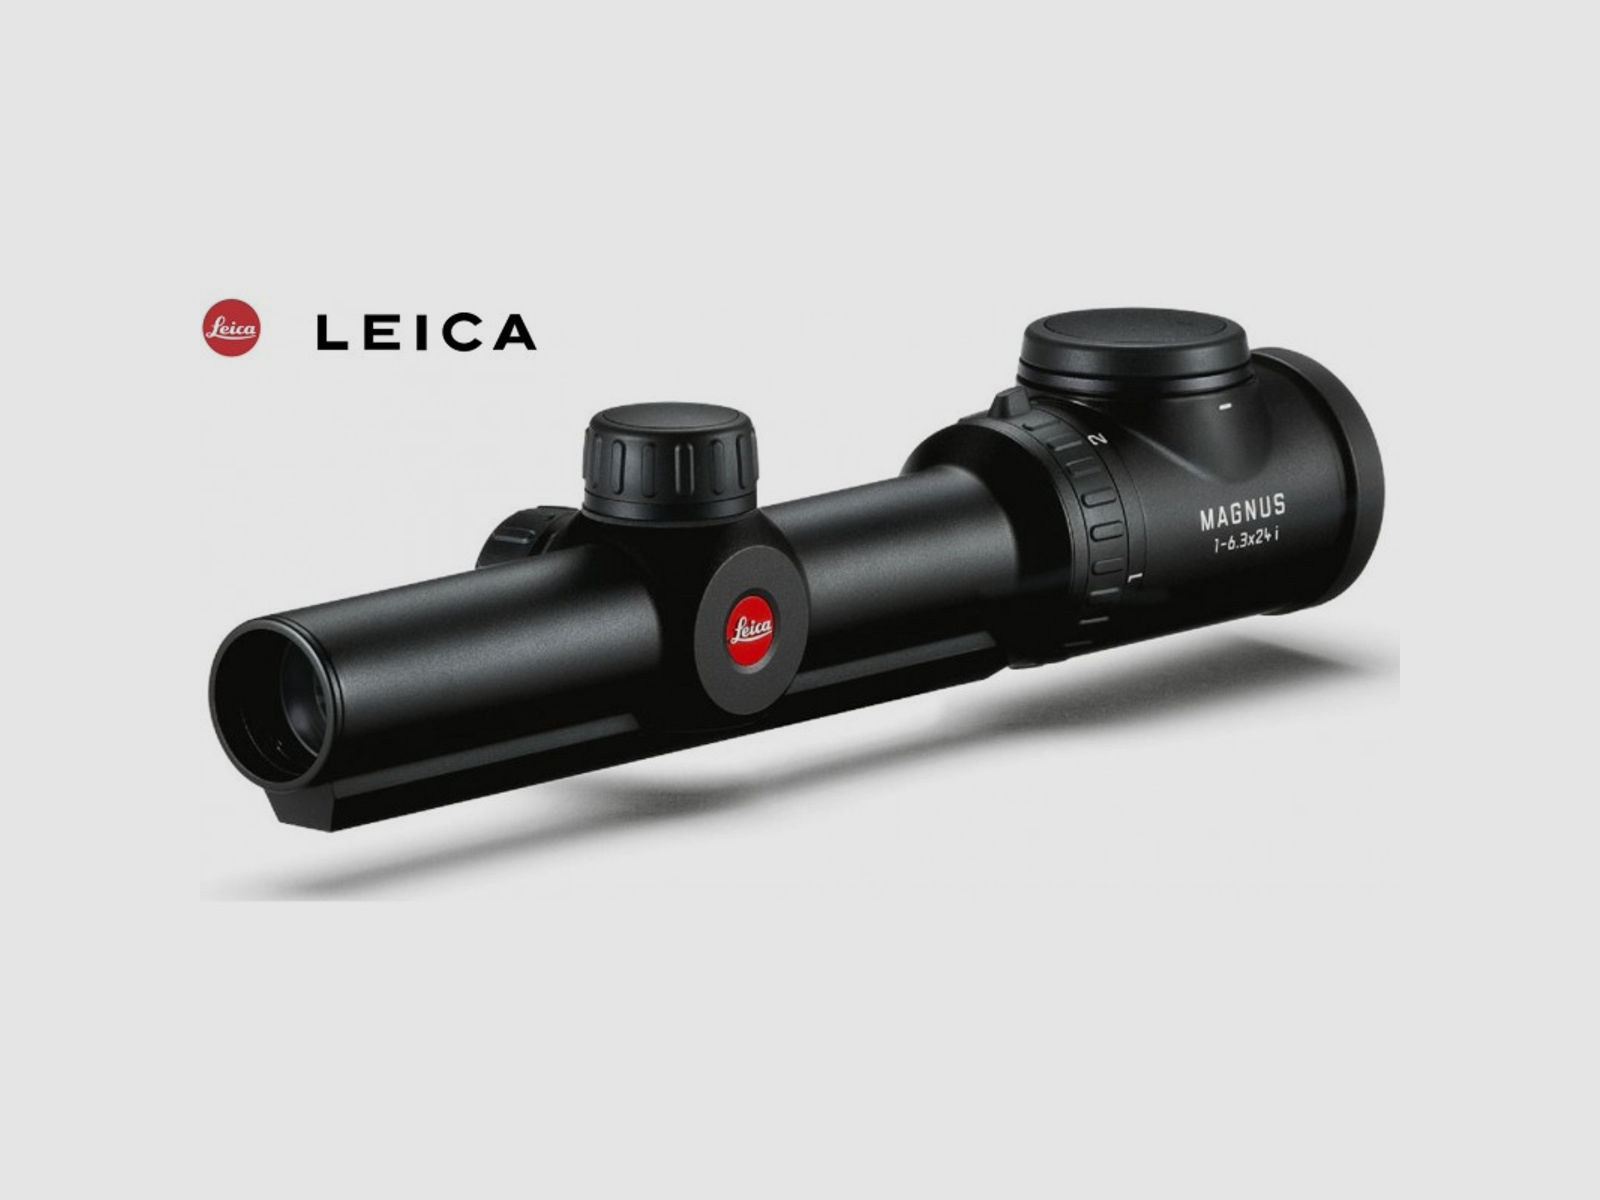 Leica Magnus 1-6,3x24 i, L-3D mit Schiene